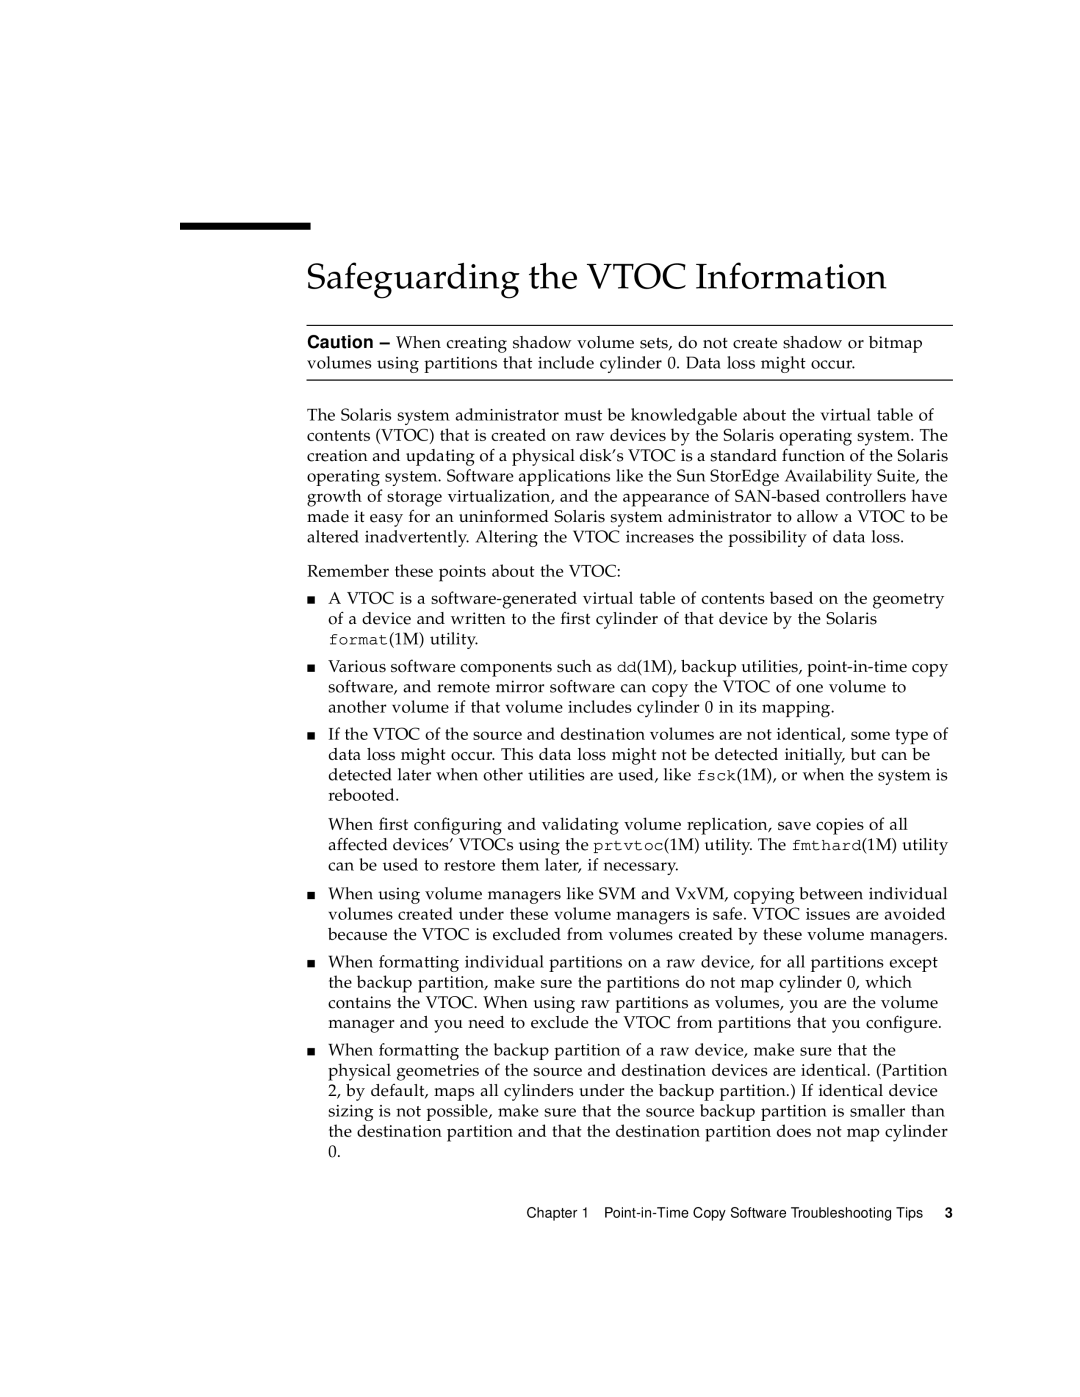 Sun Microsystems 3.2 manual Safeguarding the VTOC Information 